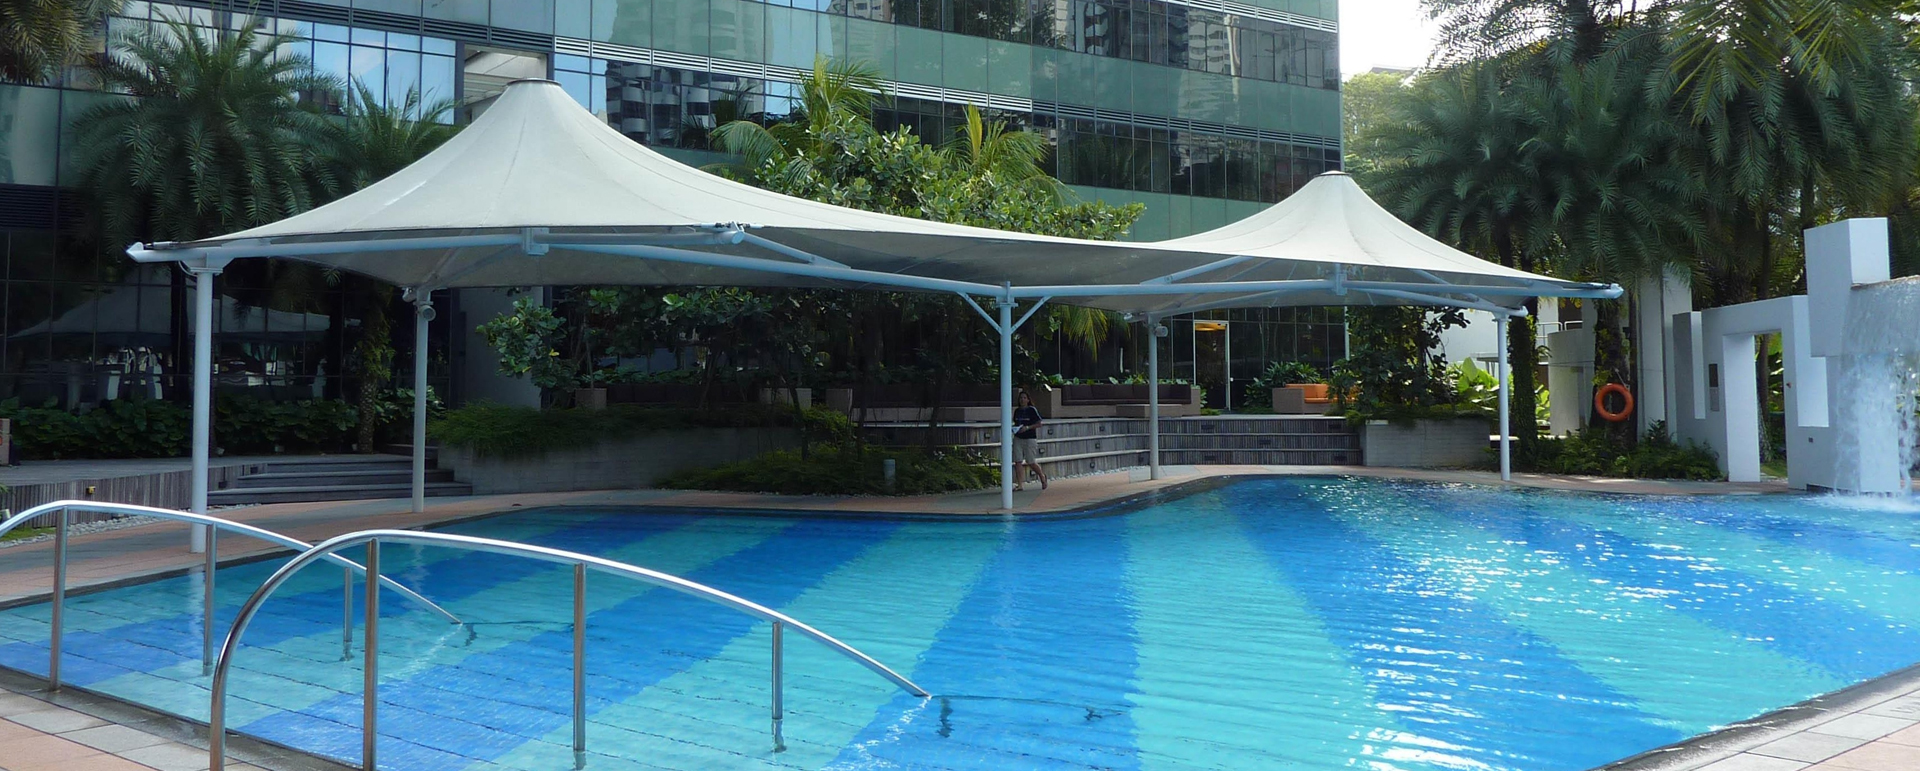 Swimming Pool Shade Manufacturers in dubai